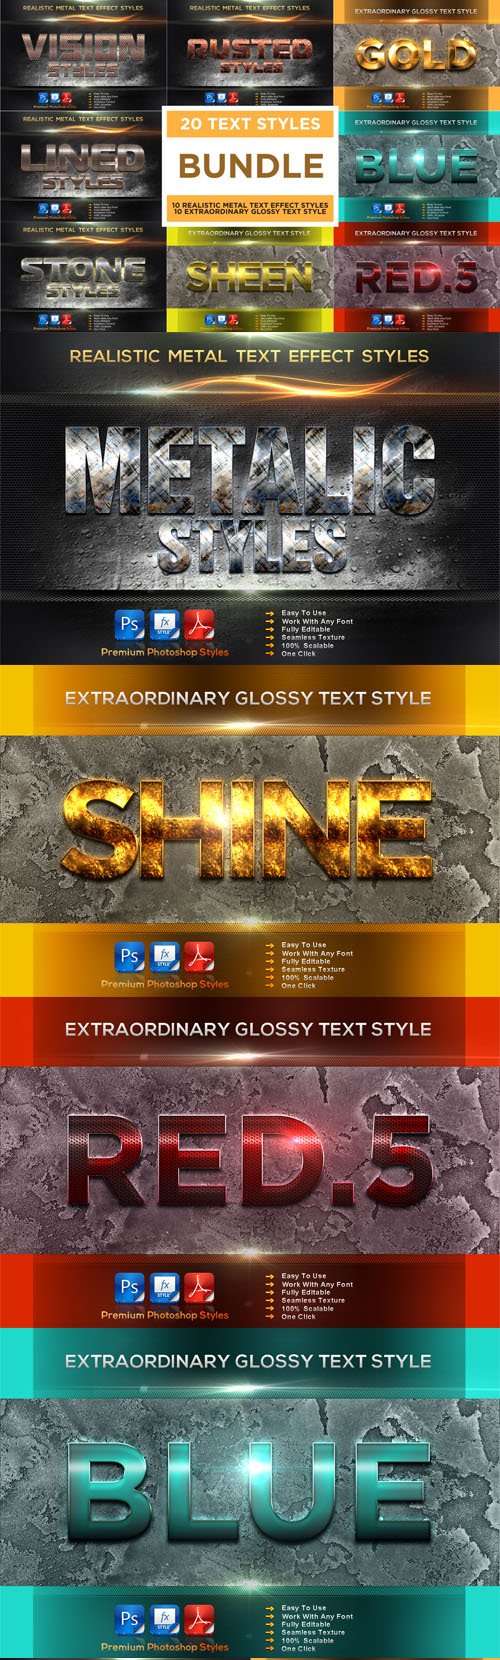 Metal & Extraordinary Glossy Text Effect Styles Bundle - 20 Premium Photoshop S...